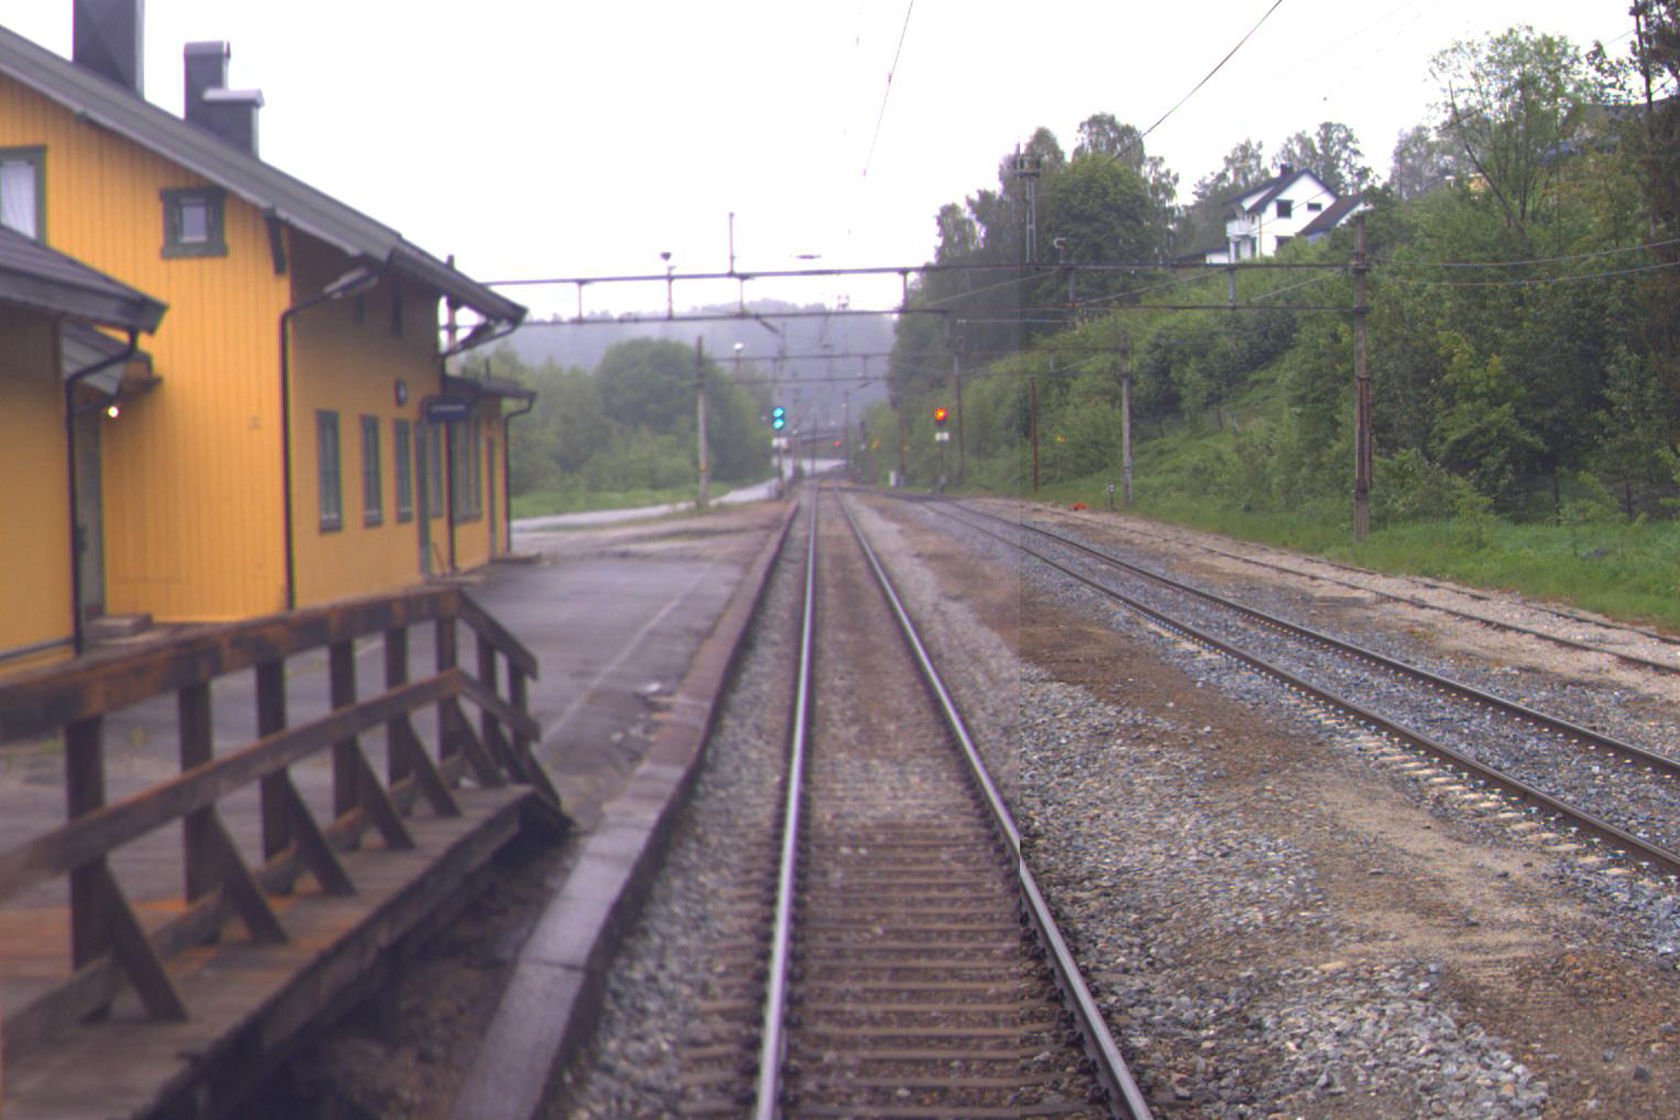 Tracks and station building at Åmot station